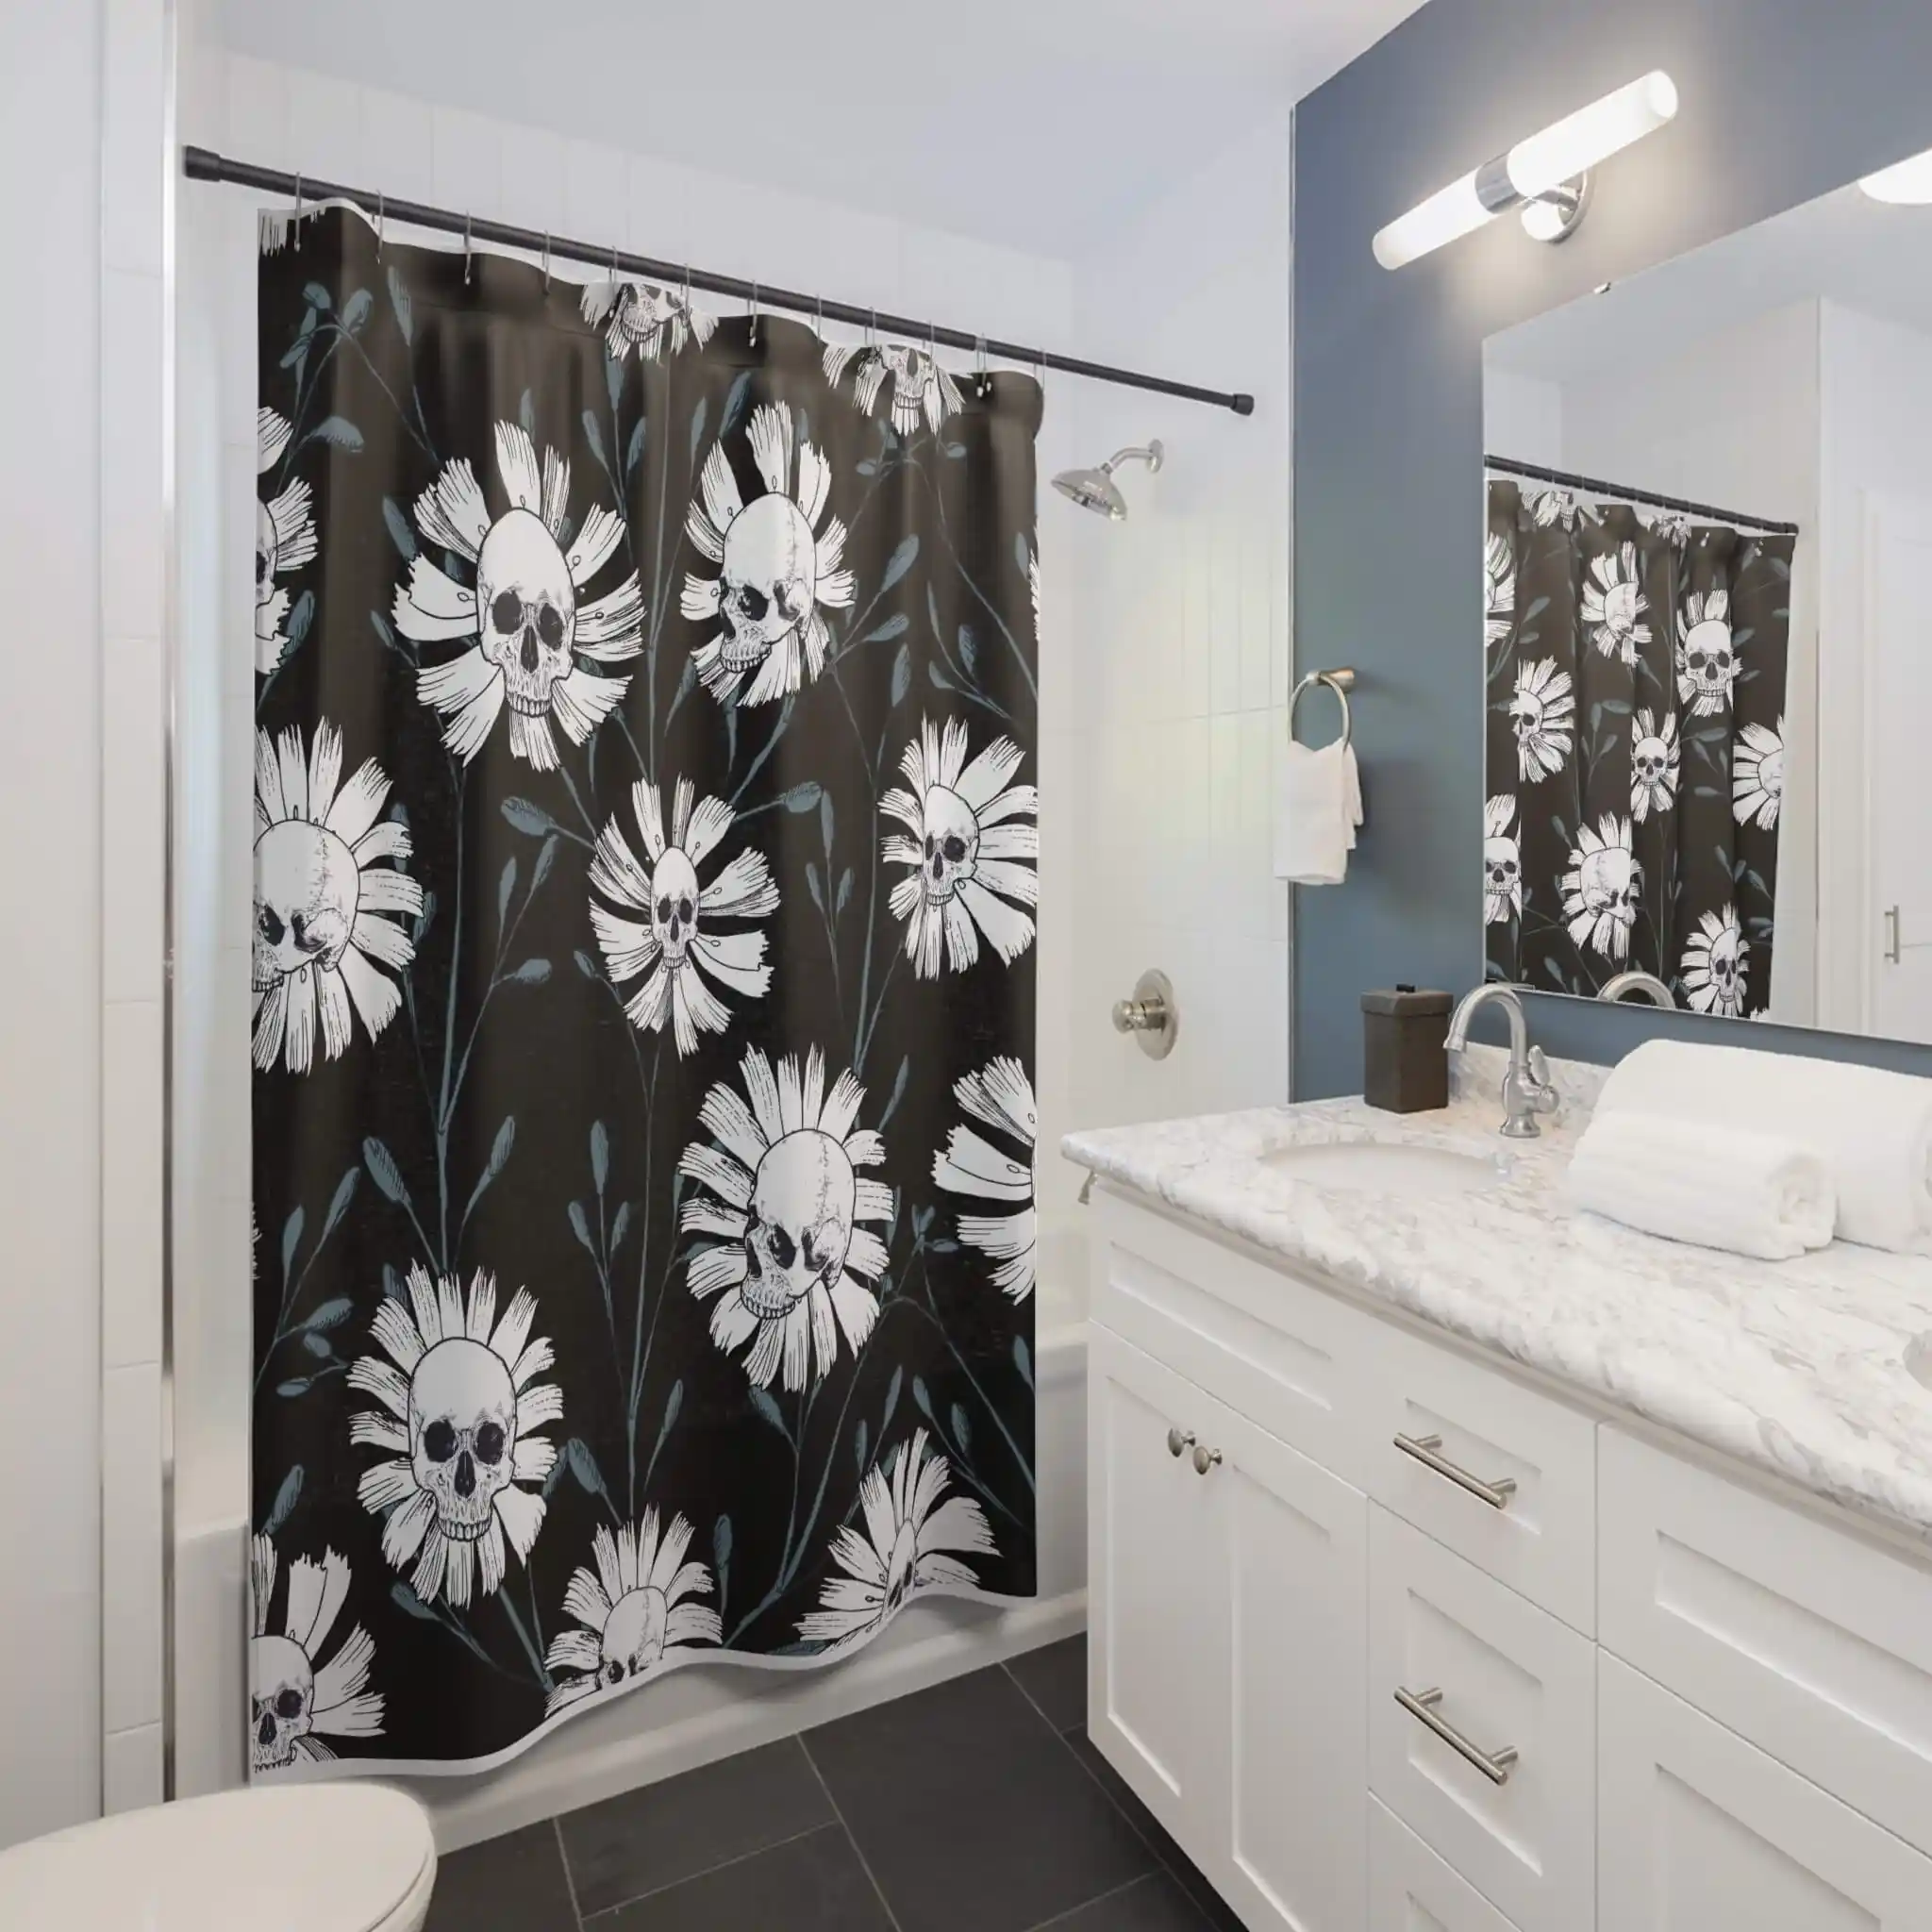 Guest bathroom shower curtain ideas: A bathroom with a black and white shower curtain.